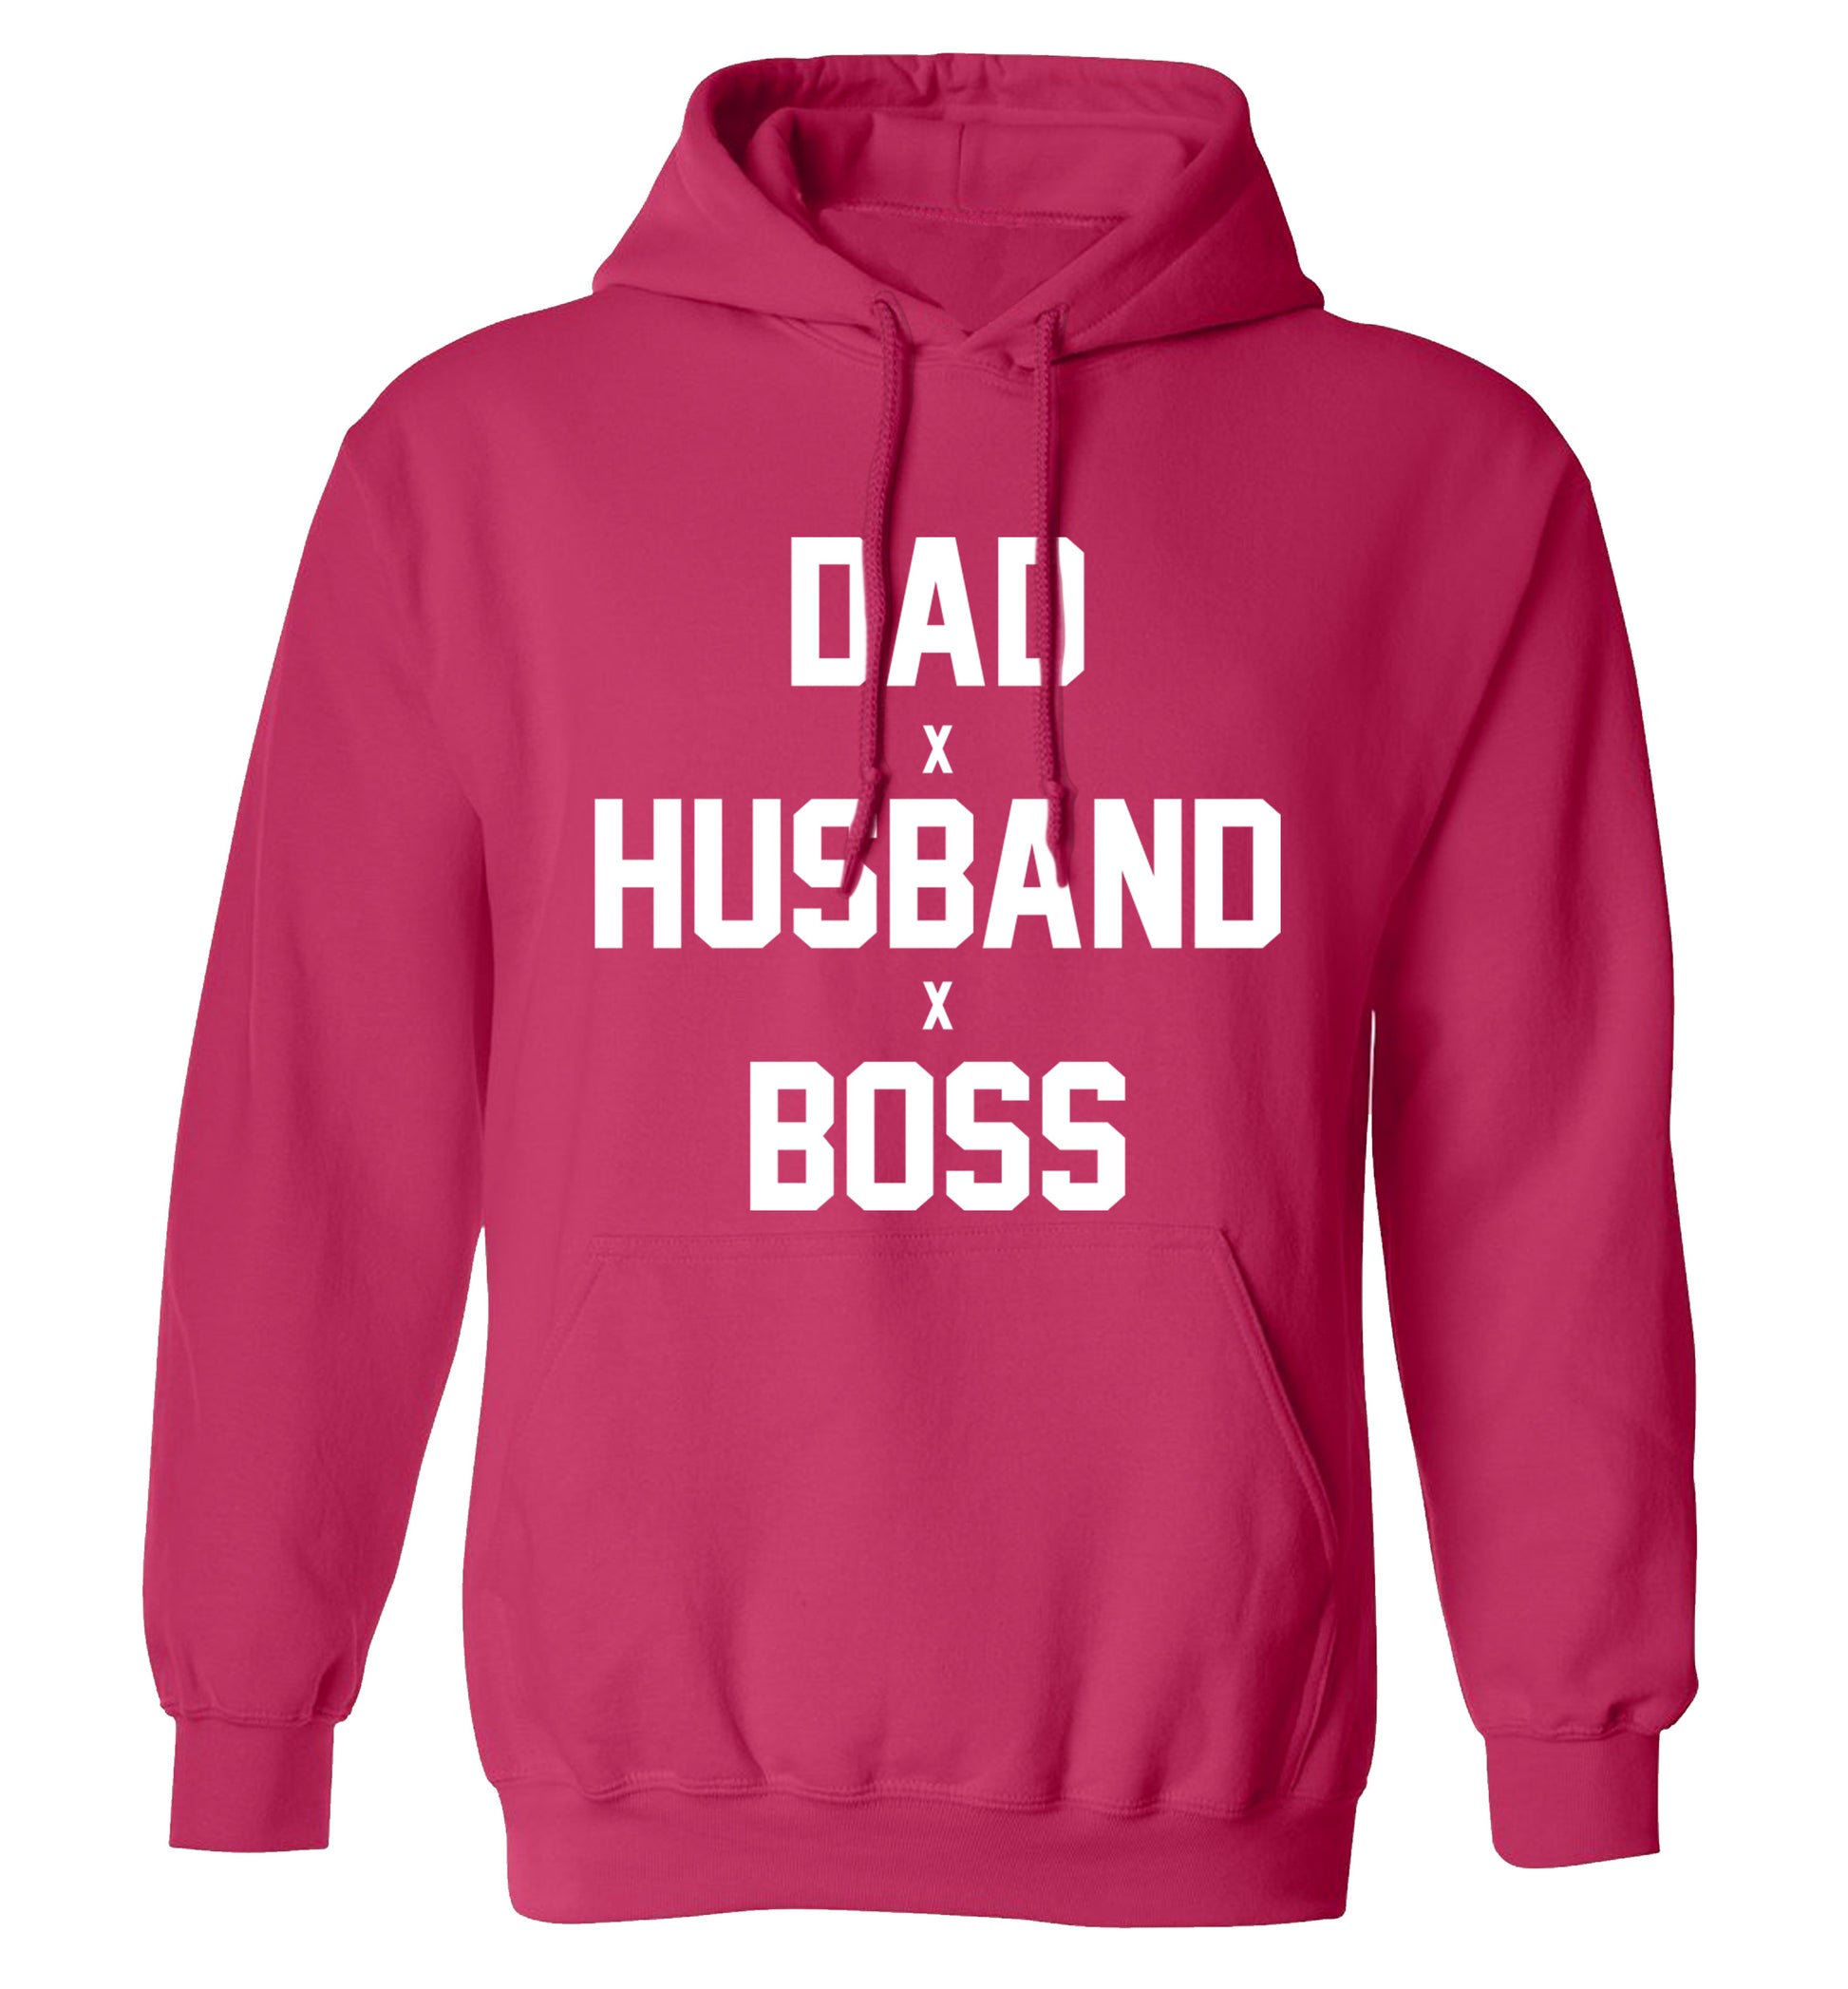 Dad husband boss adults unisex pink hoodie 2XL